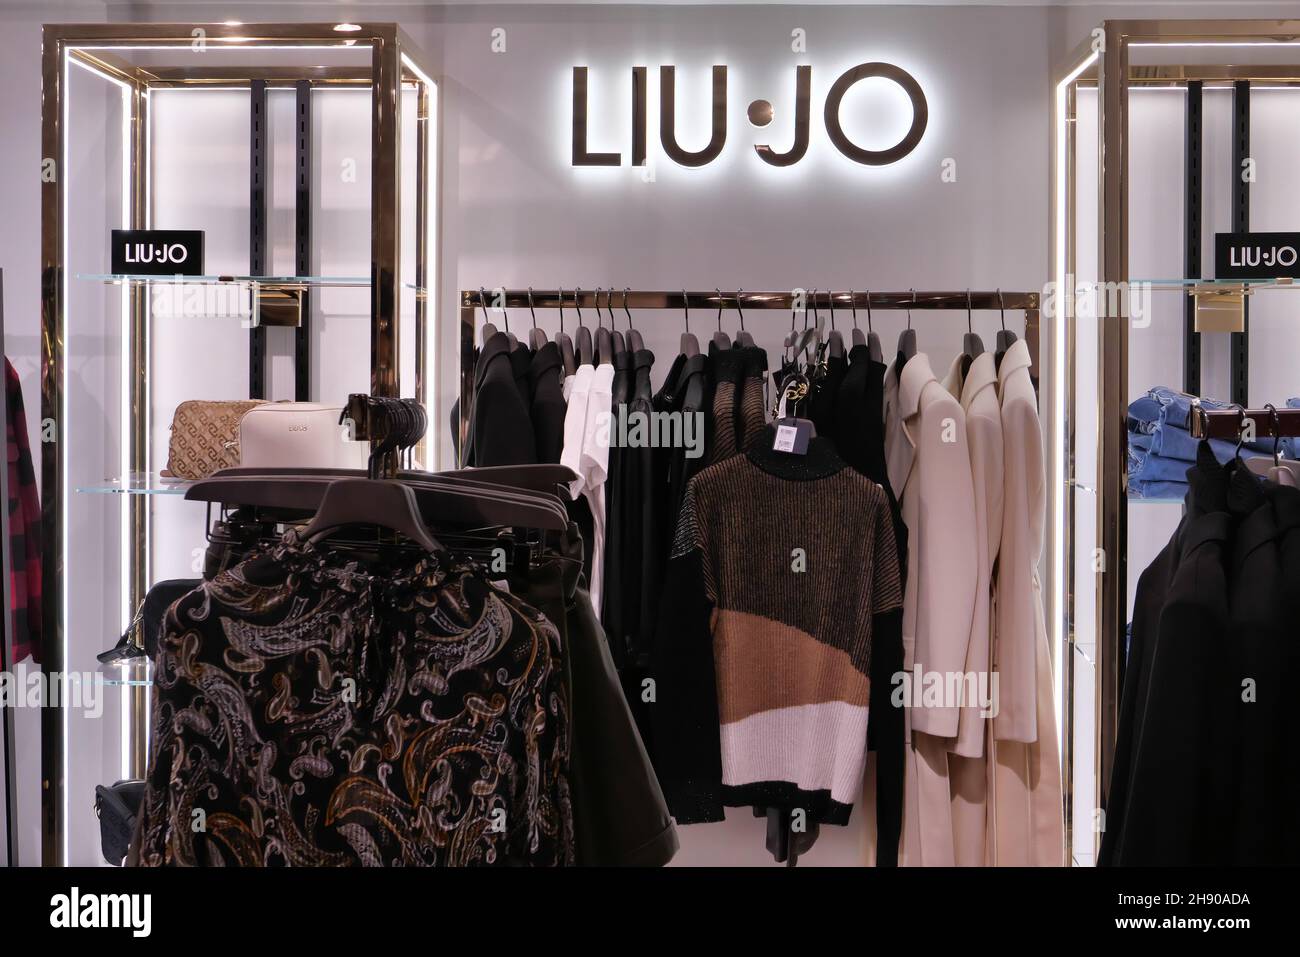 LIU JO CLOTHING ON DISPLAY INSIDE THE FASHION STORE Stock Photo